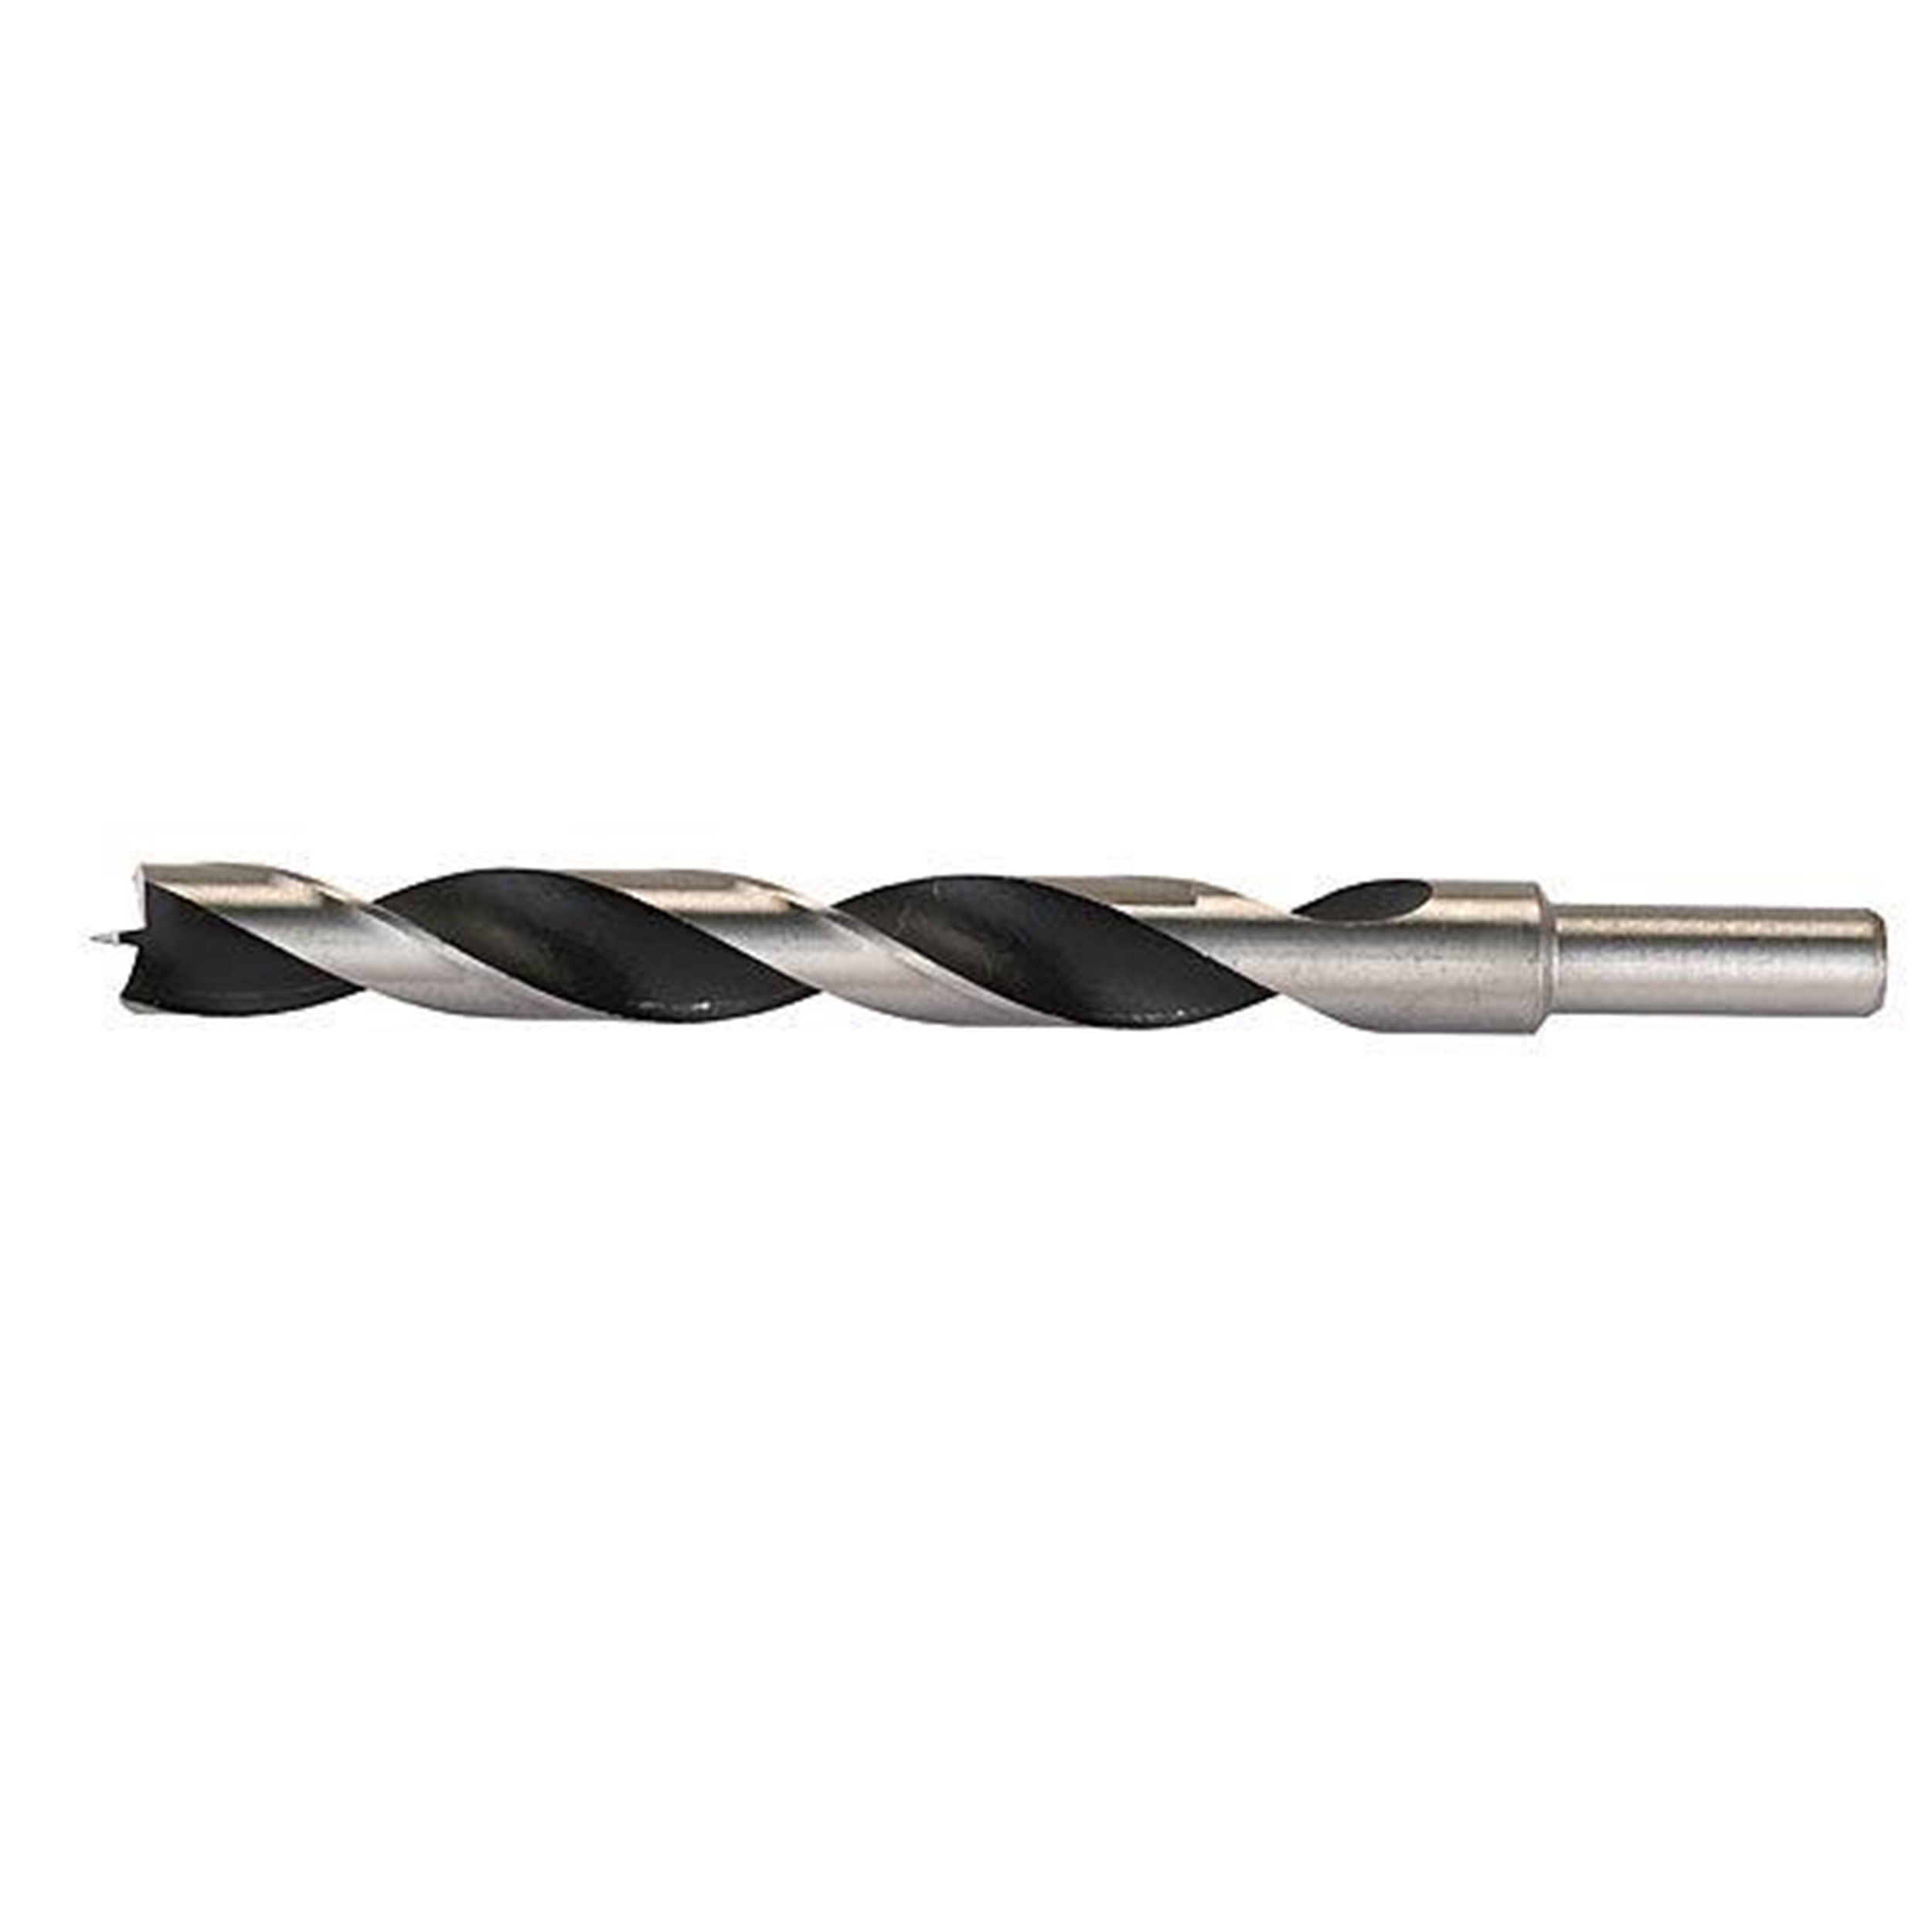 14mm Chrome-vanadium Steel Brad Point Drill Bit